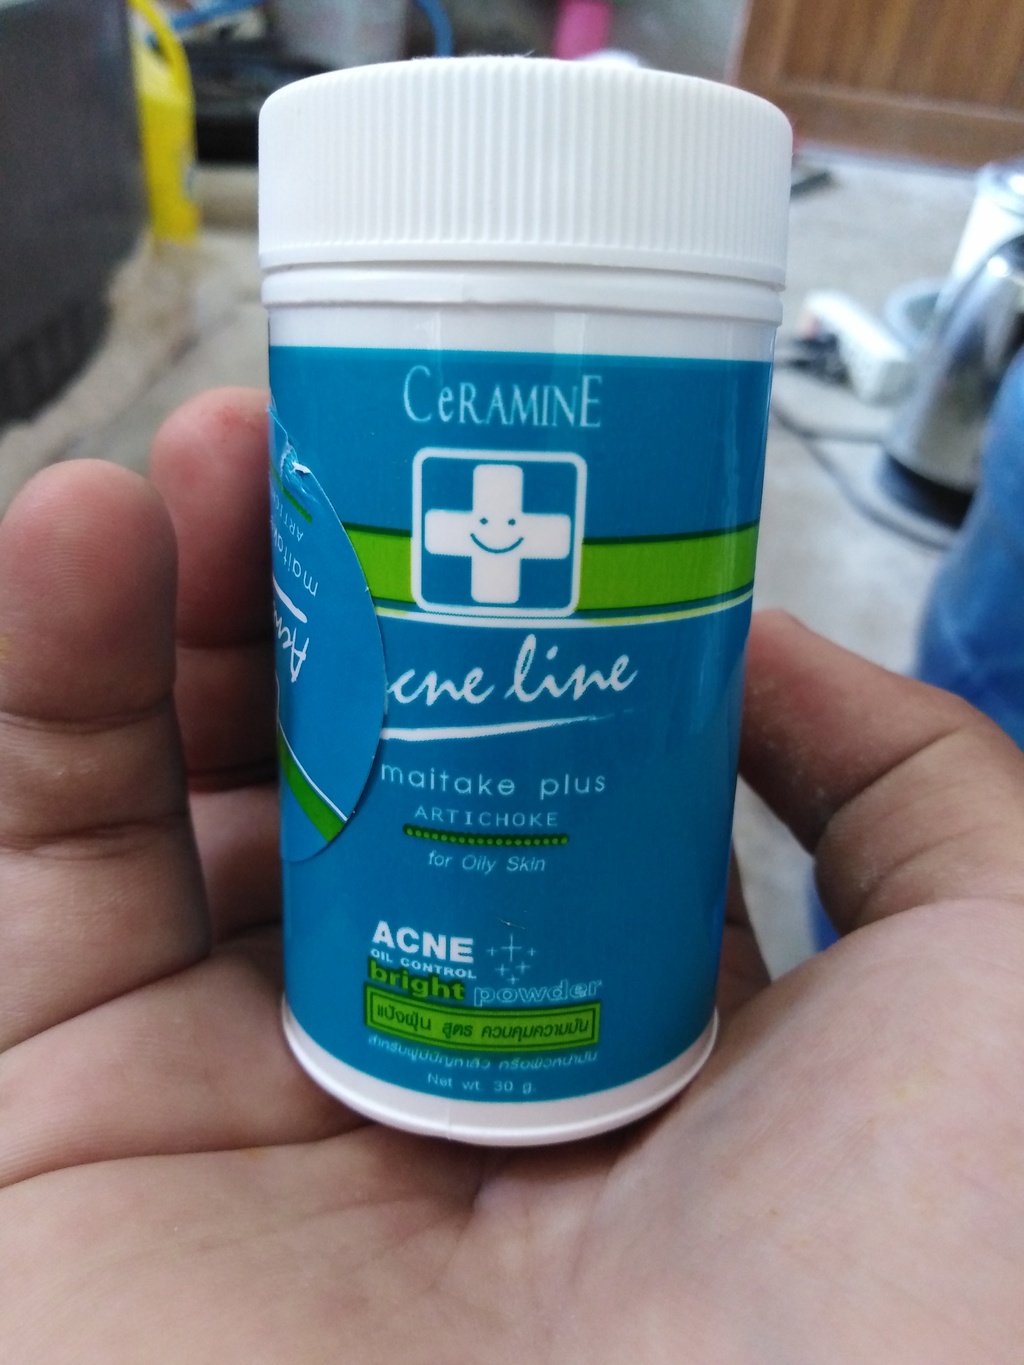 Ceramine Acne Line Maitake Plus Artichoke Acne Powder 